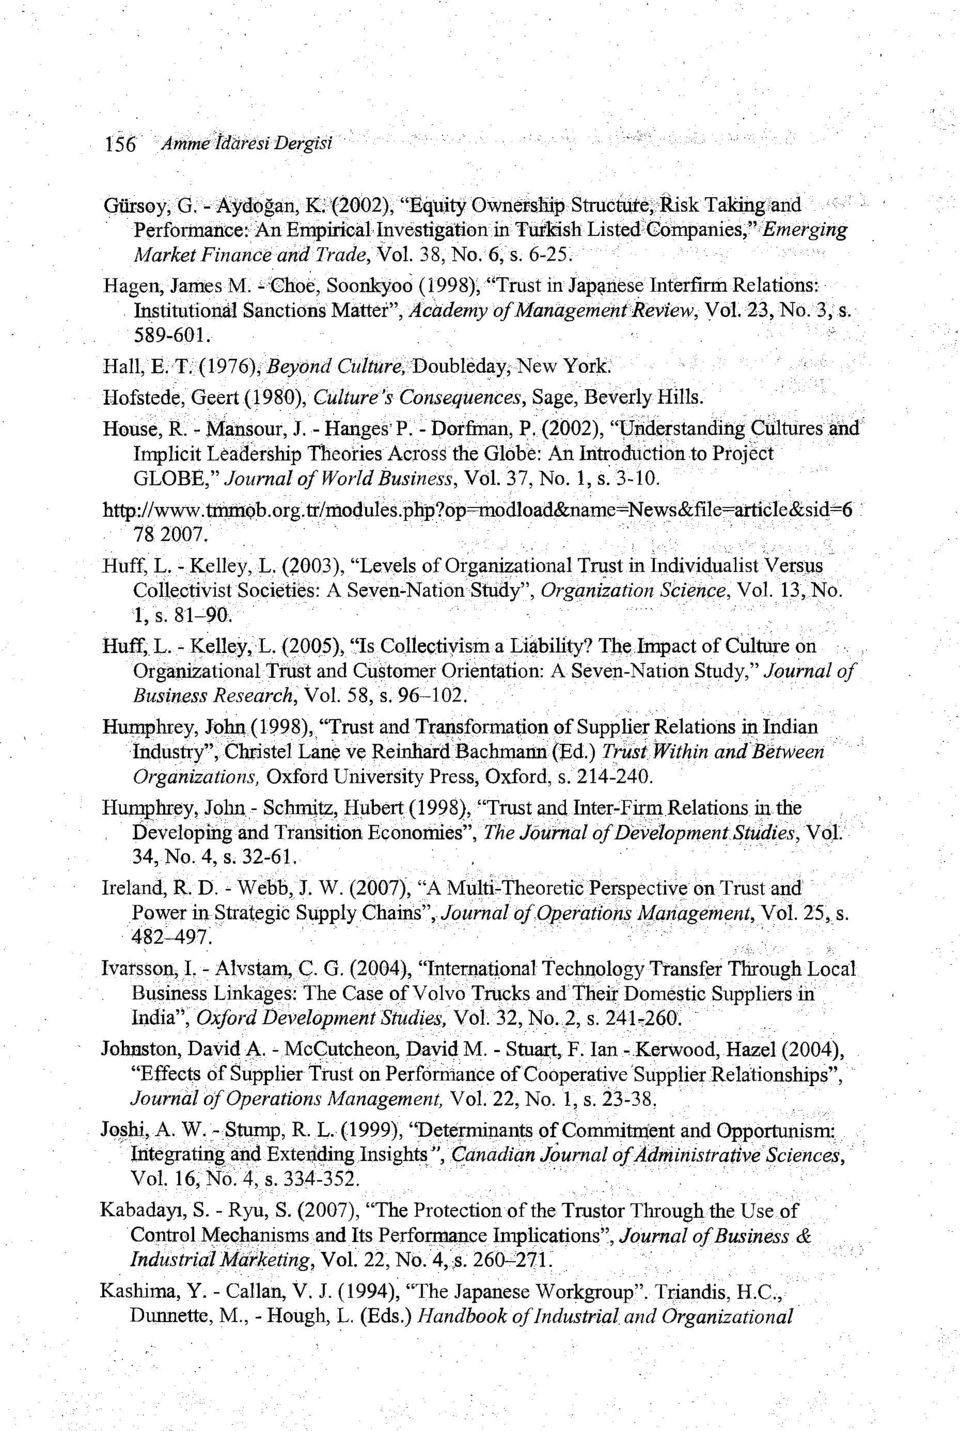 '-Chöe'j;Soonkyoö (1998), "Tnistfu Jap:mese'Interfırm Relations: Institutioilal Sancticins Mattei'\Academy ofmanagementreview, Vol. 23, No. 3, s. 589-601. HalI;E.T. (1976),Beyond Culture, Doubleday, New York.